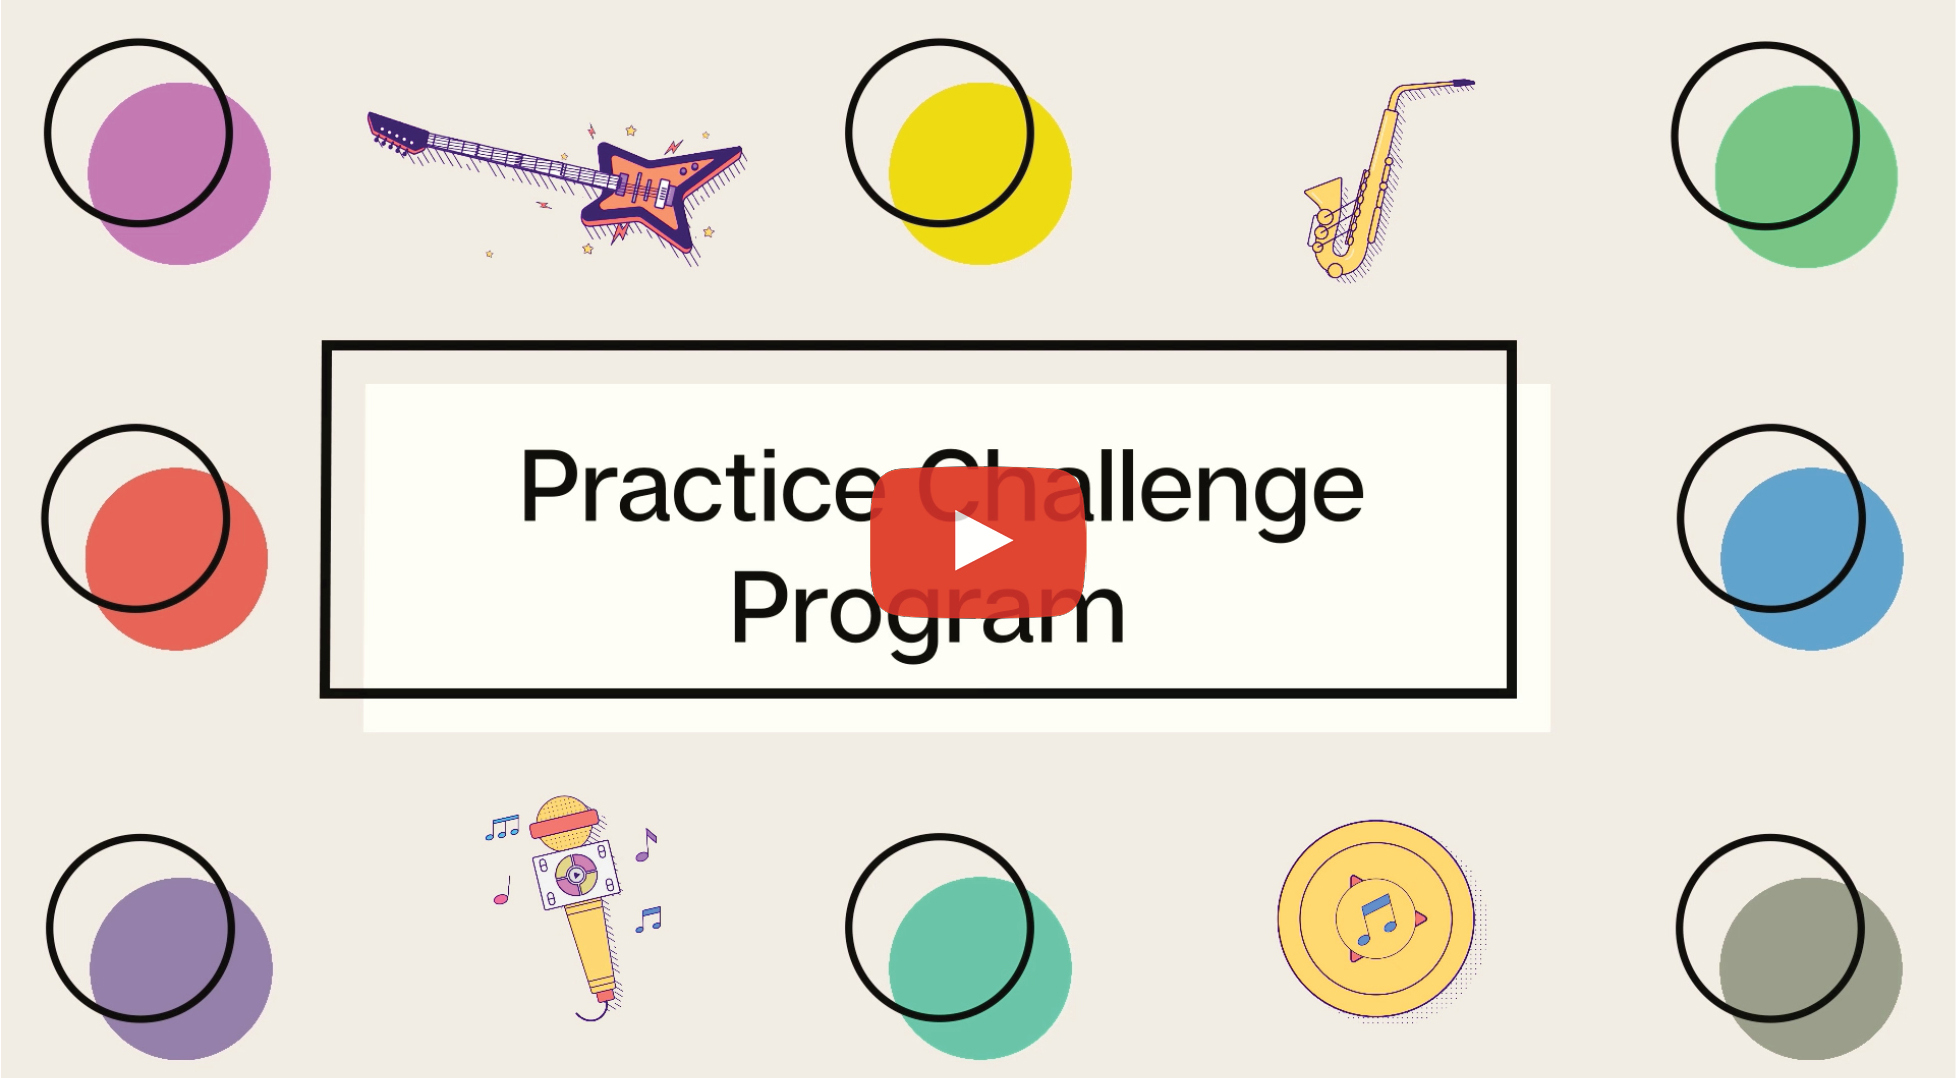 Practice challenge